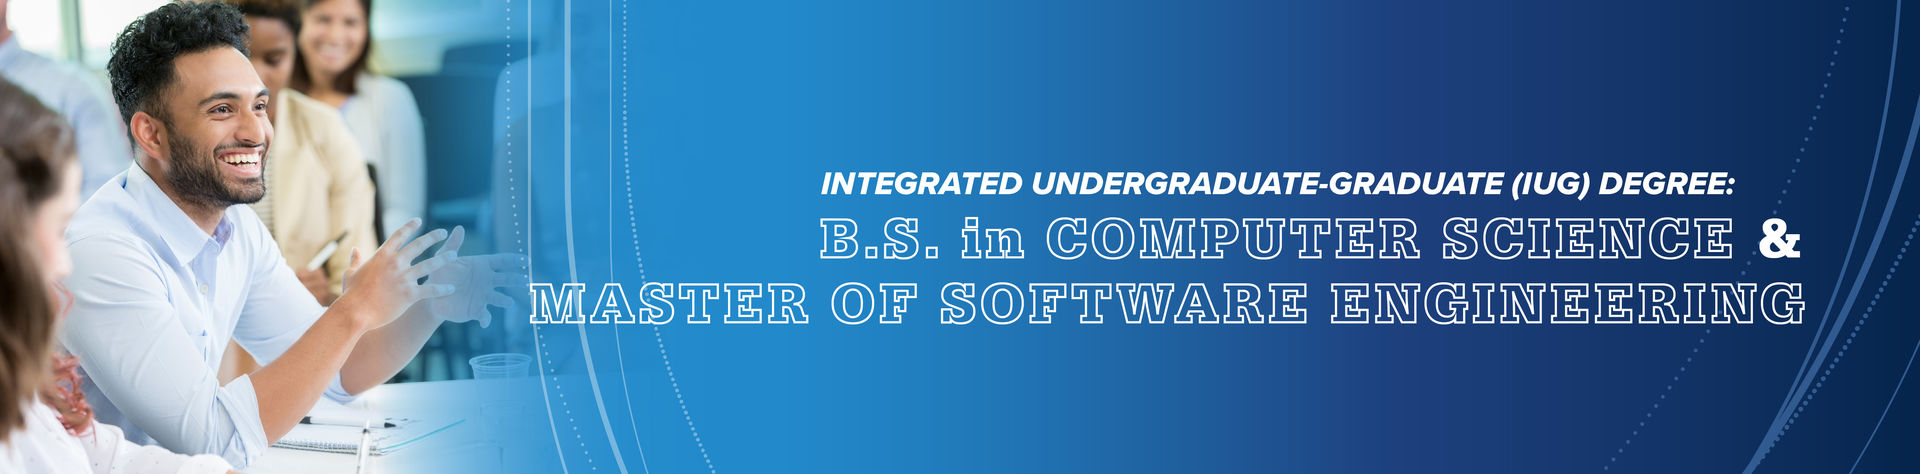 Integrated undergraduate-graduate IUG Degree Computer Science and Master of Software Engineering 